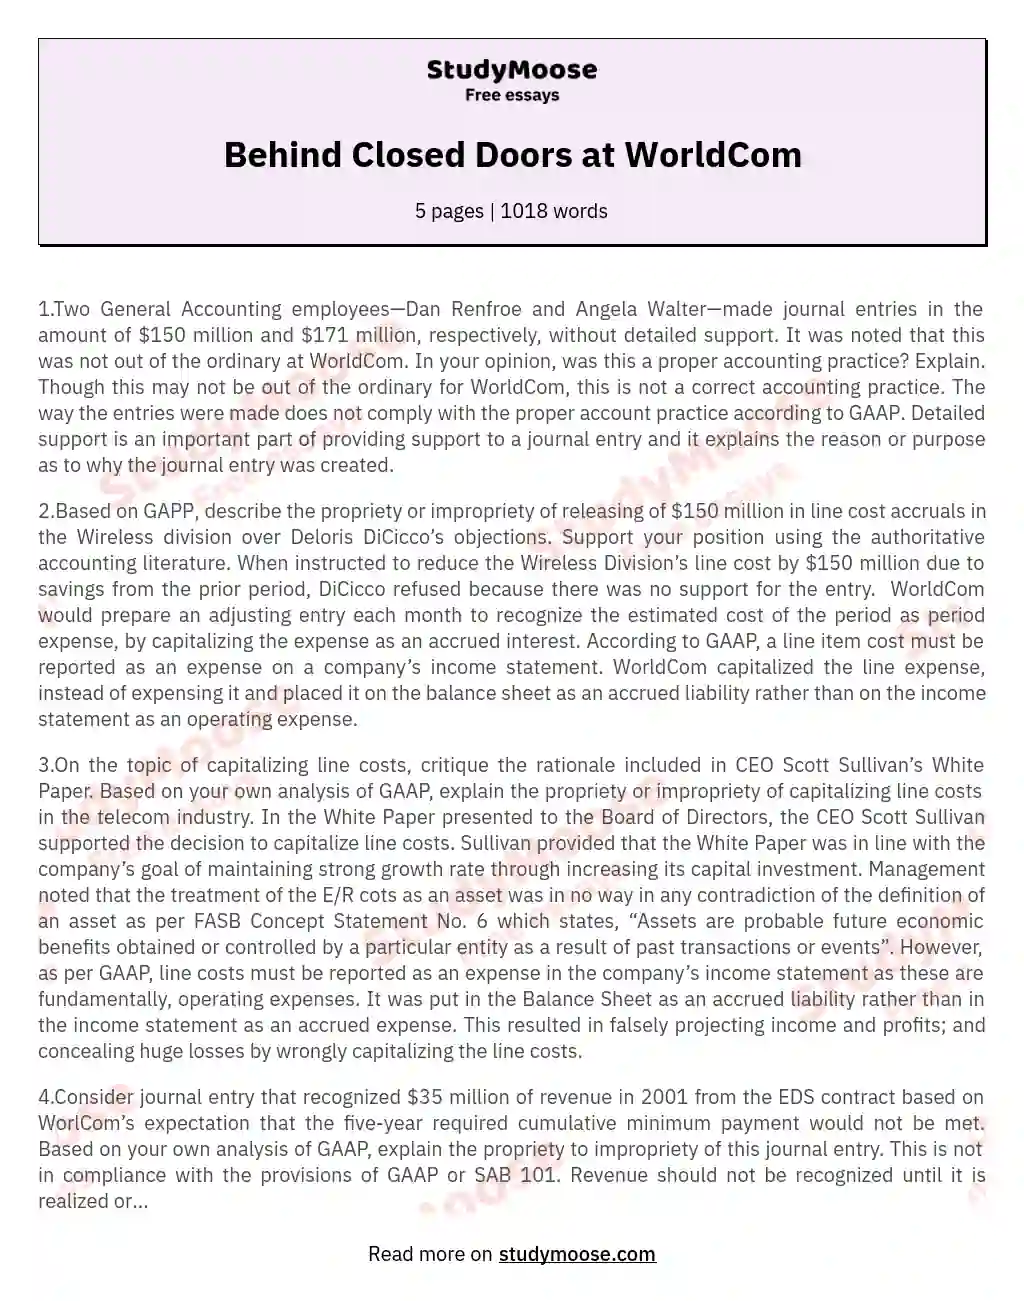 Behind Closed Doors at WorldCom essay